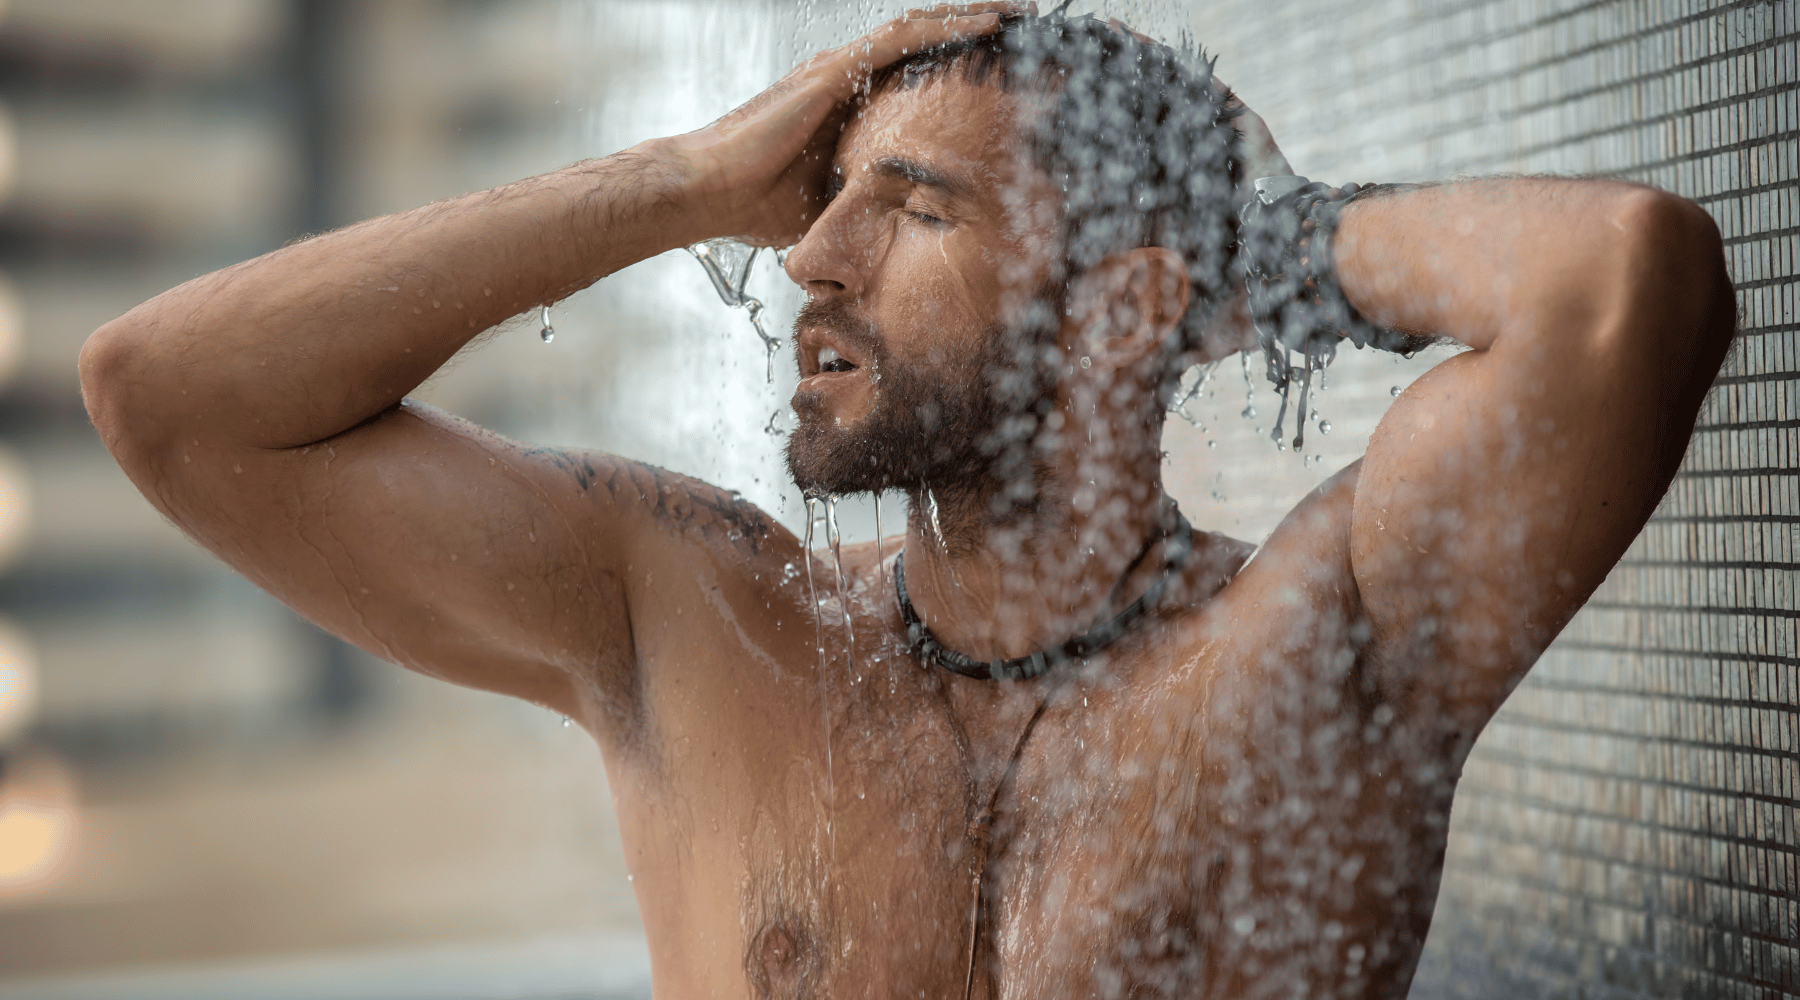 man taking mindful shower